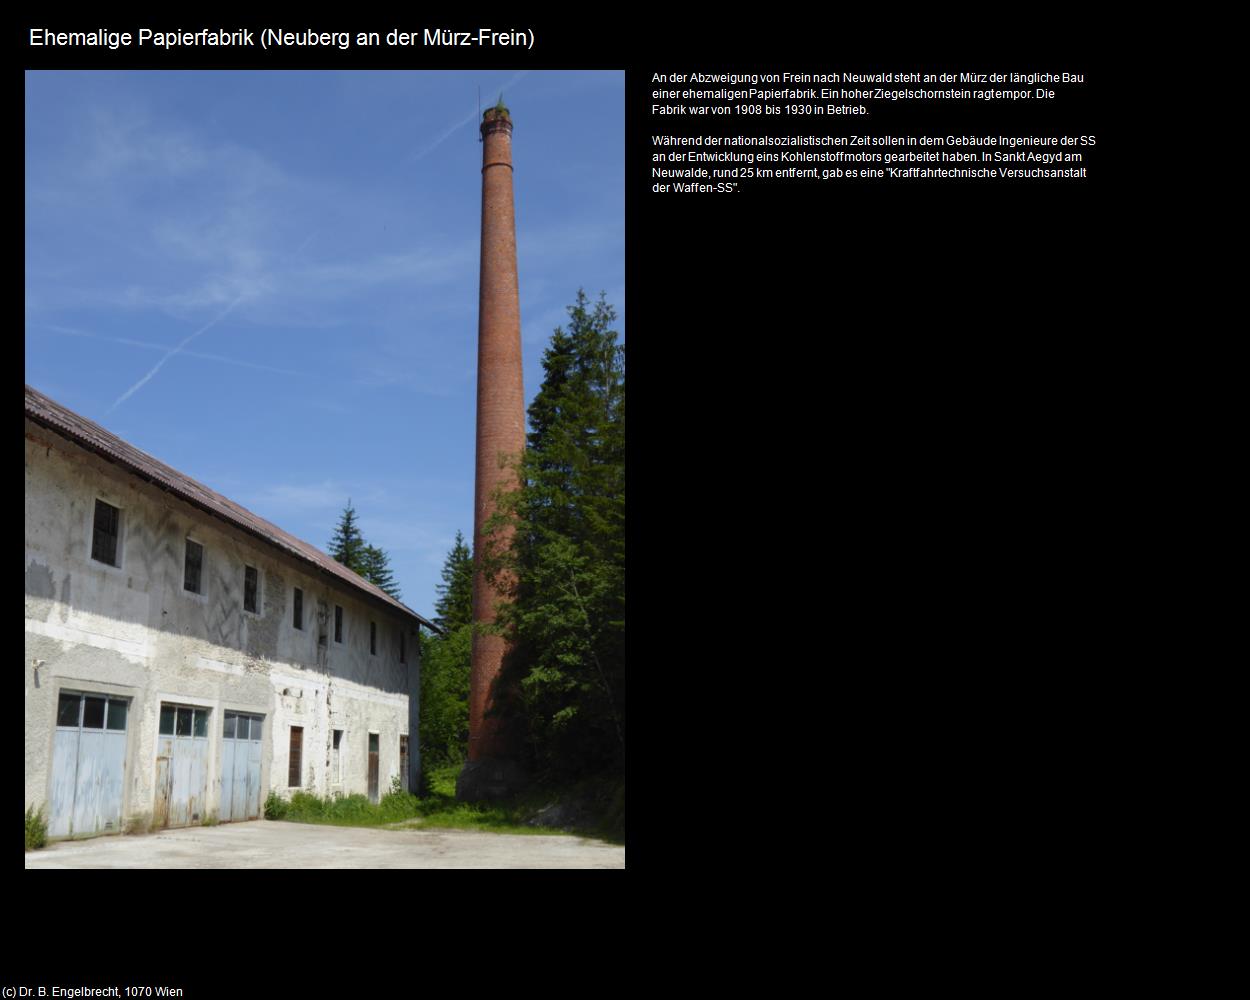 Ehem. Papierfabrik (Frein an der Mürz) (Neuberg an der Mürz) in Kulturatlas-STEIERMARK